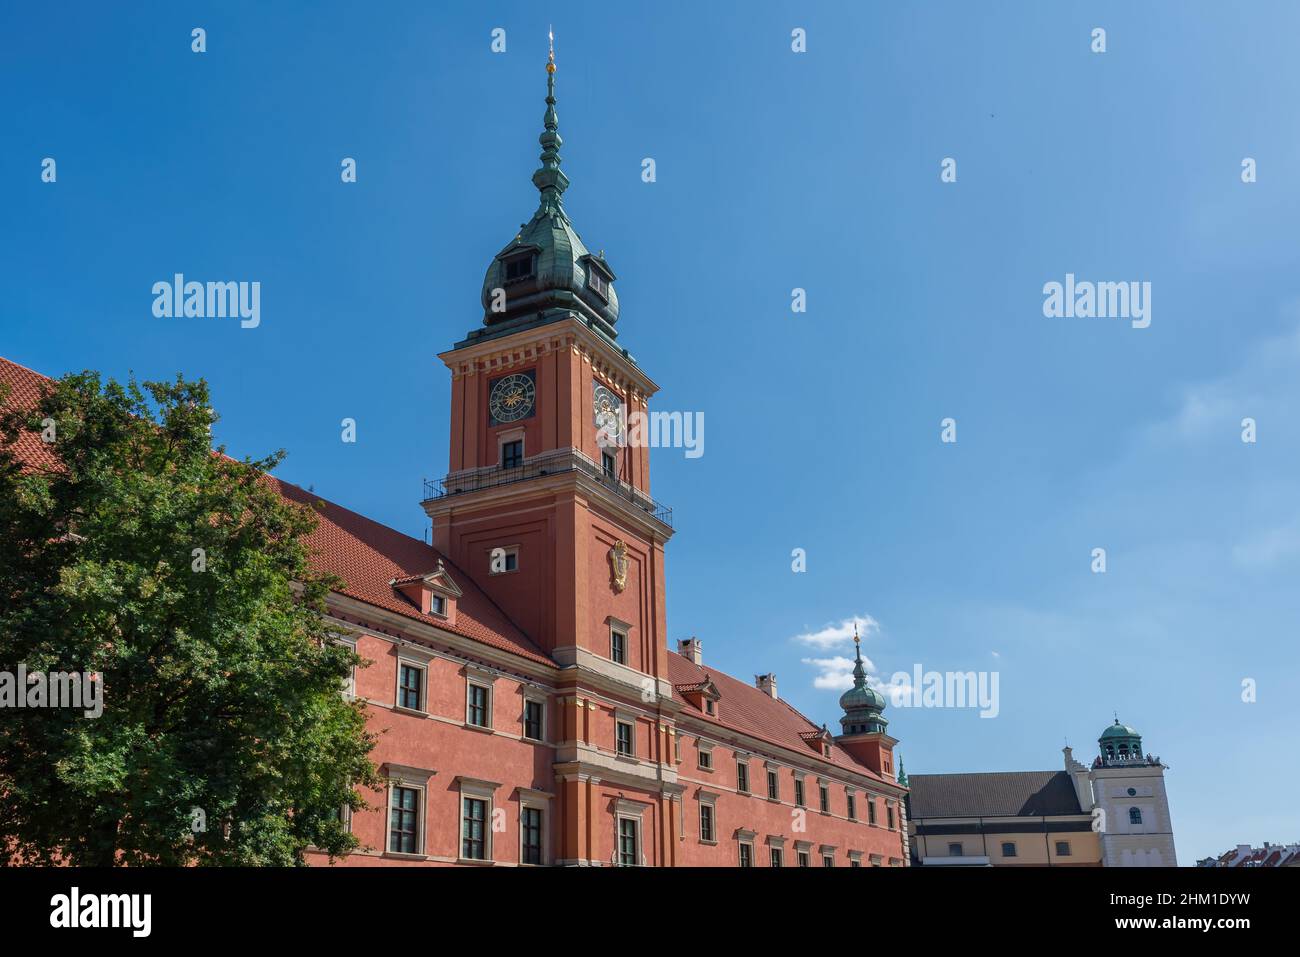 Warsaw Royal Castle at Castle Square - Warsaw, Poland Stock Photo